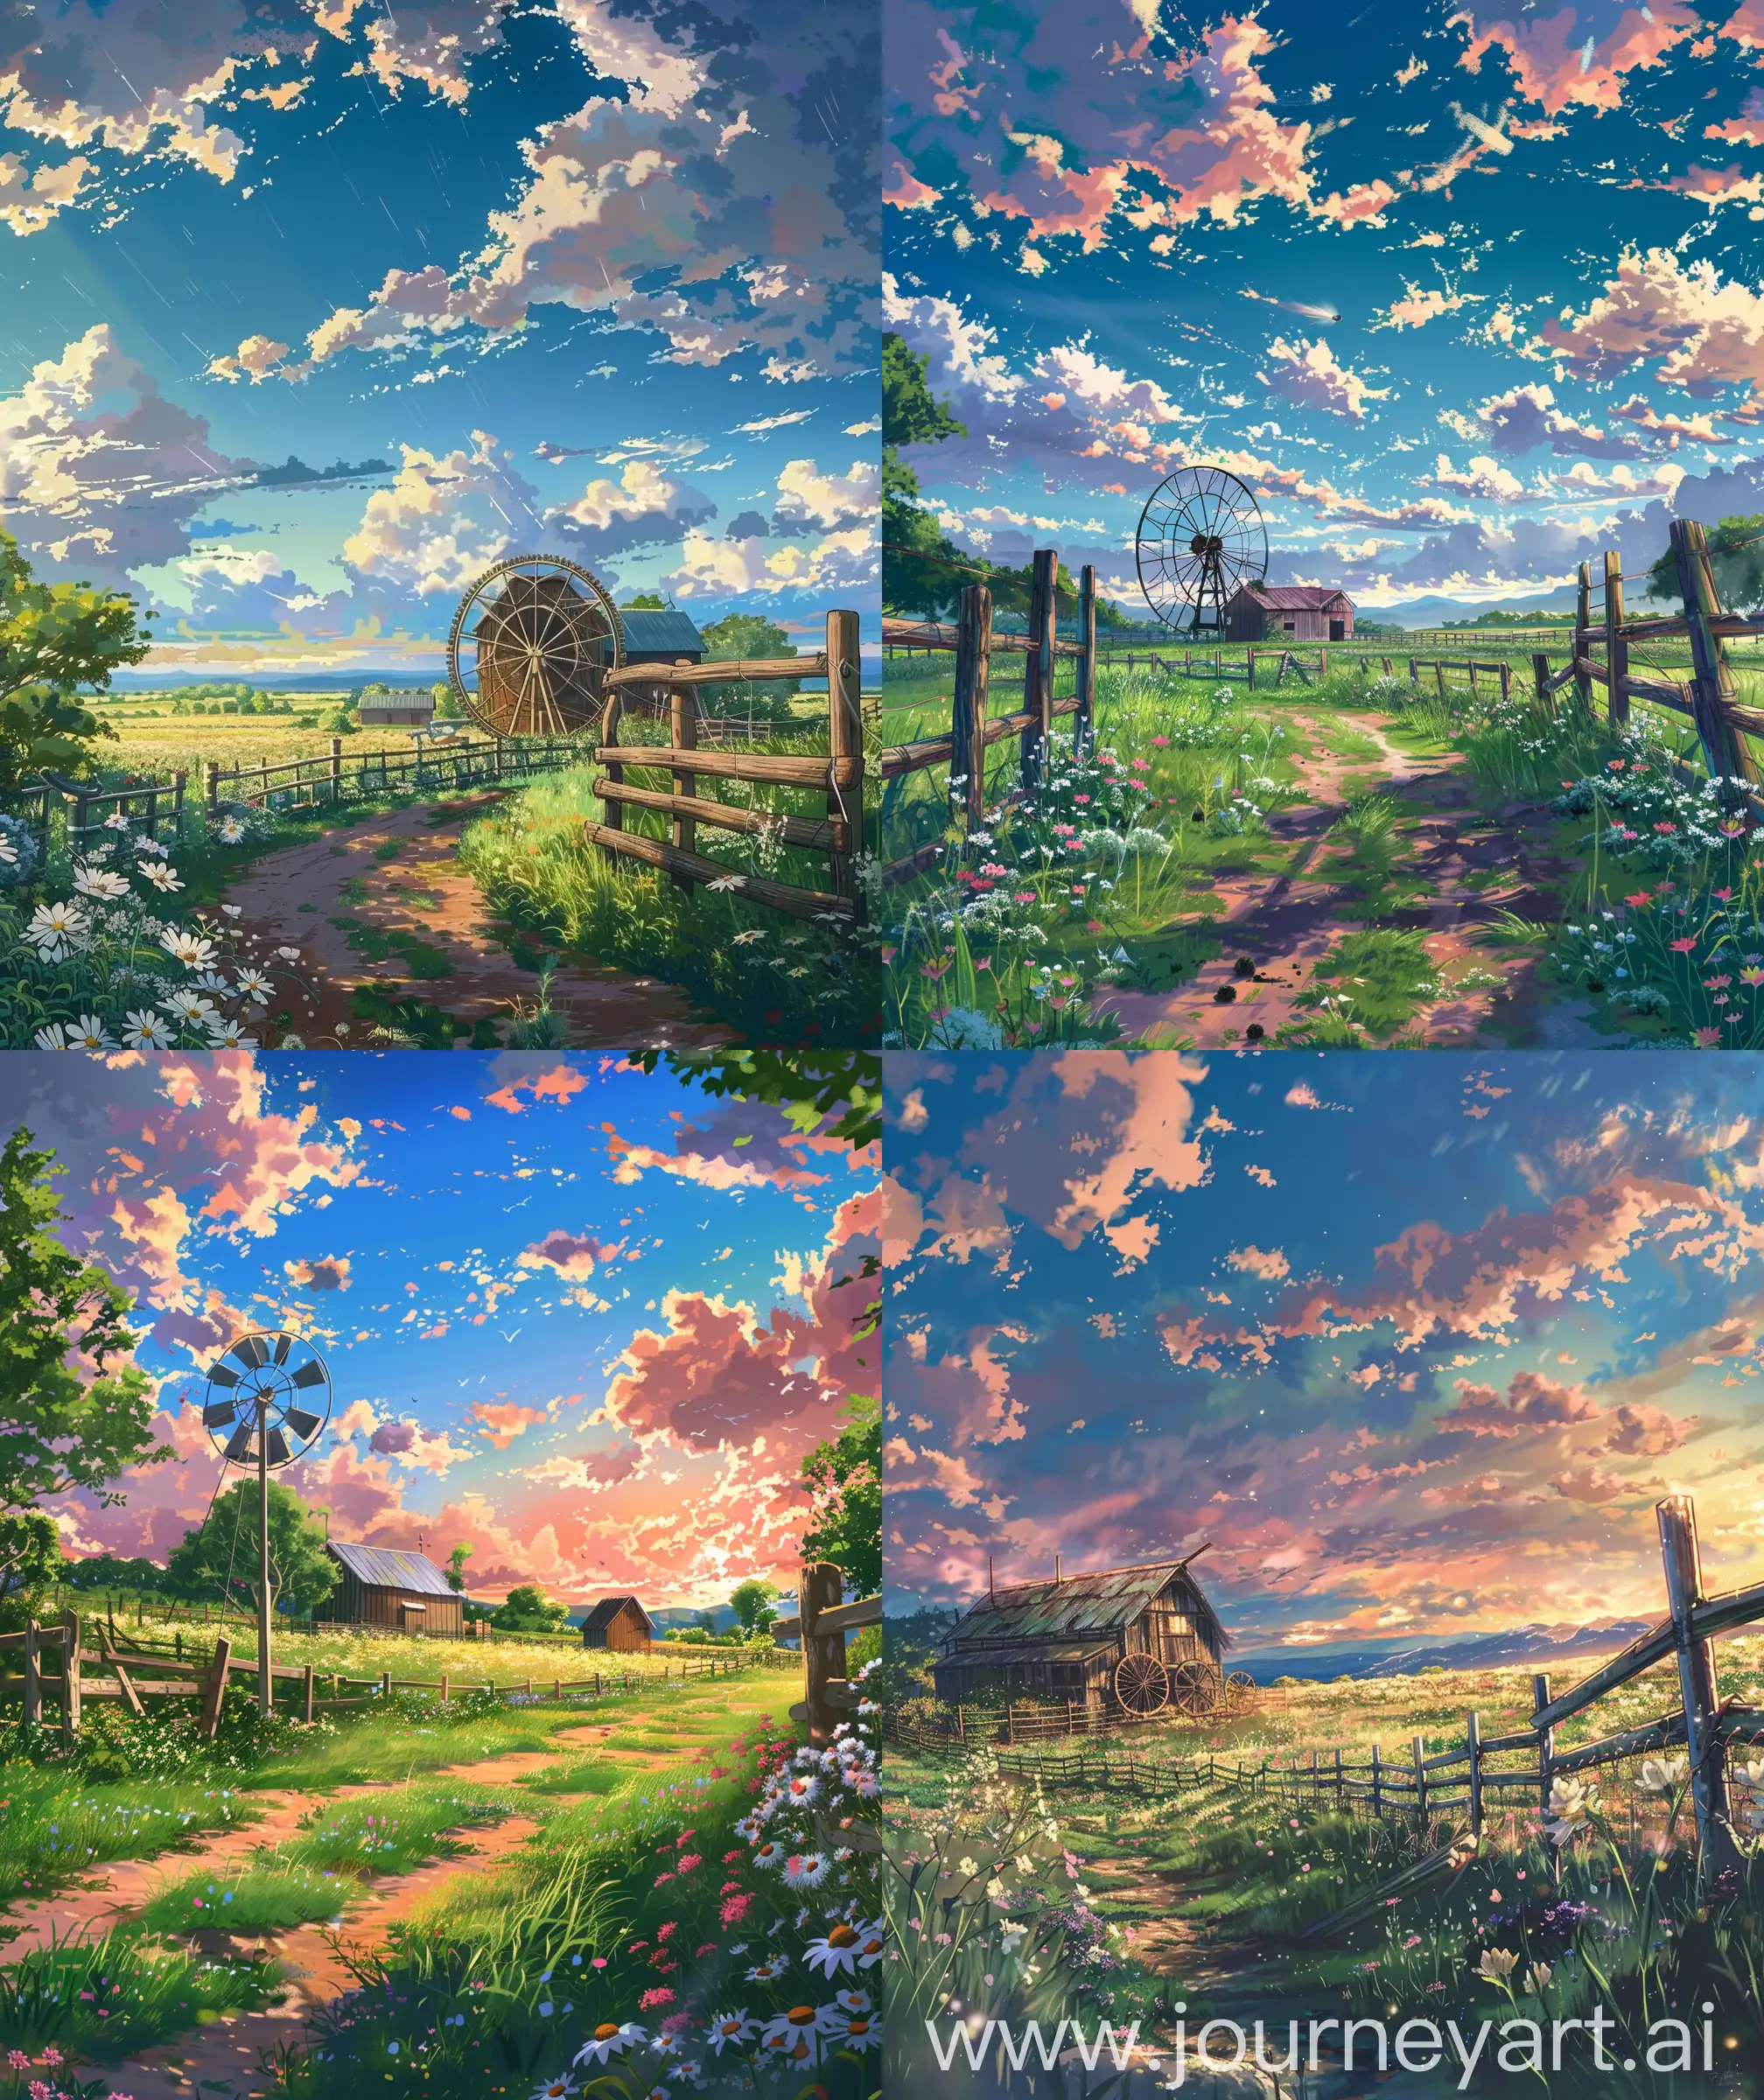 Serene-Anime-Landscape-Farmstead-with-Windmill-under-a-Beautiful-Sky